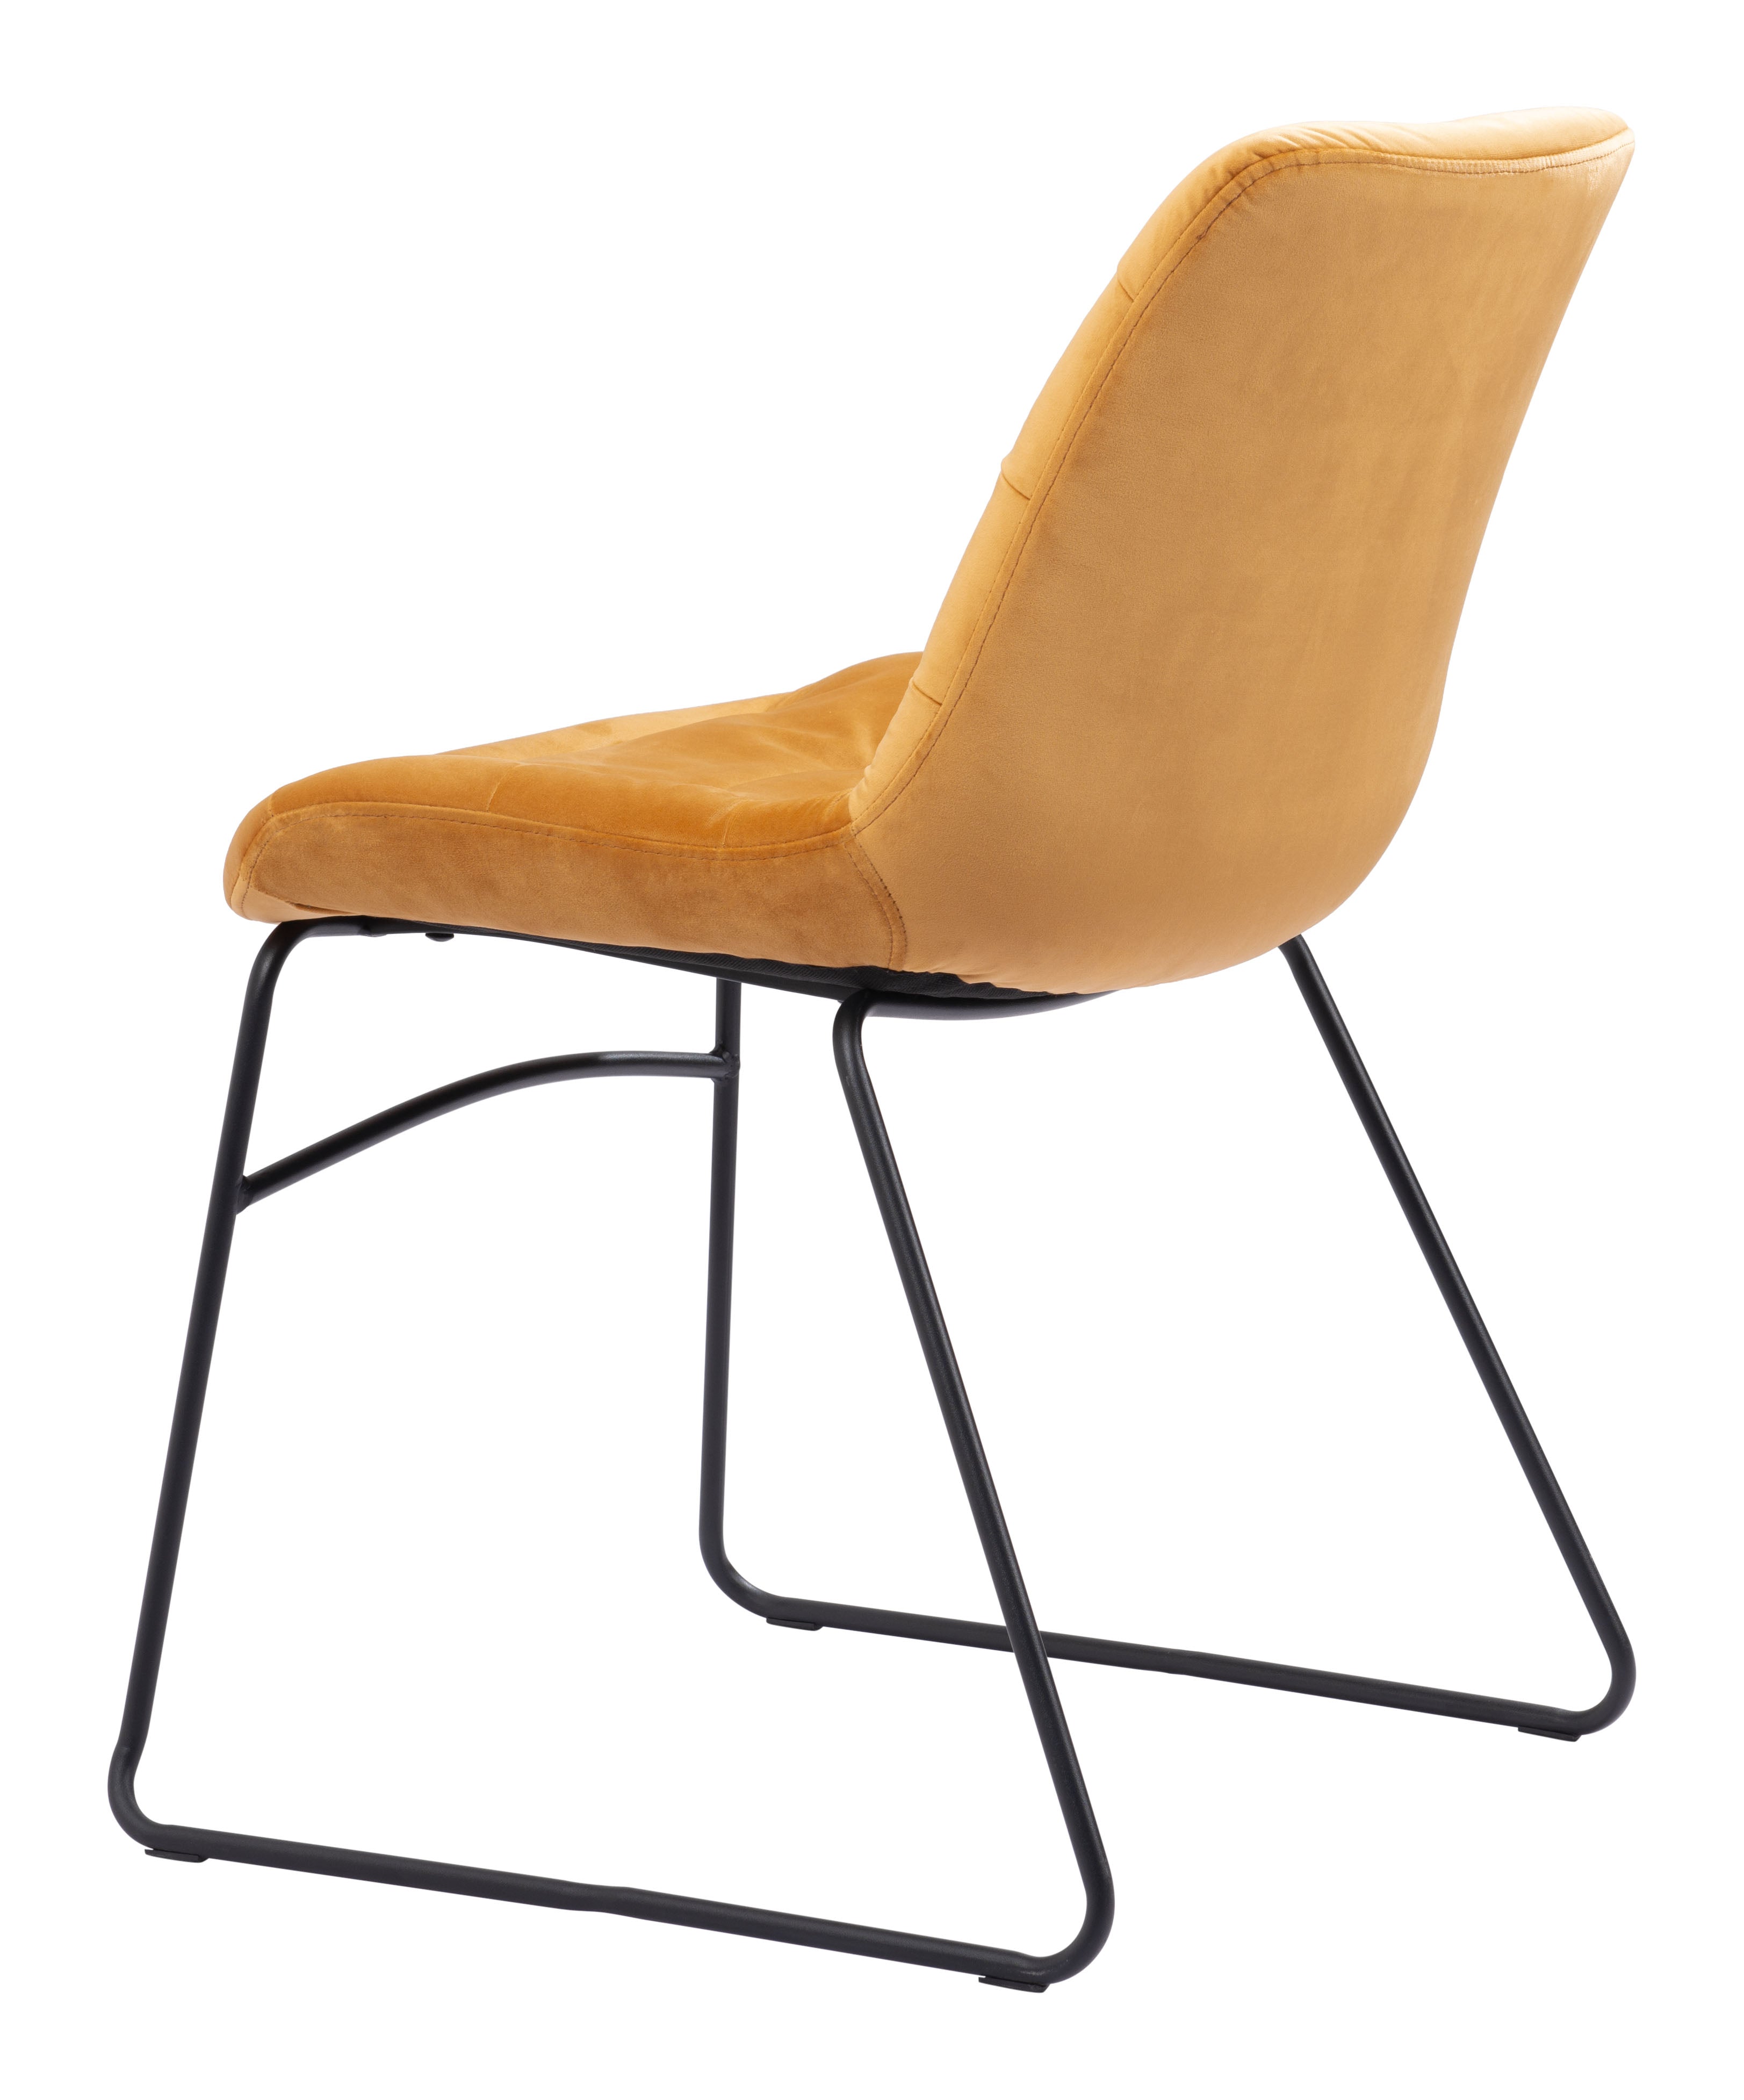 Tammy Dining Chair (Set of 2) Orange